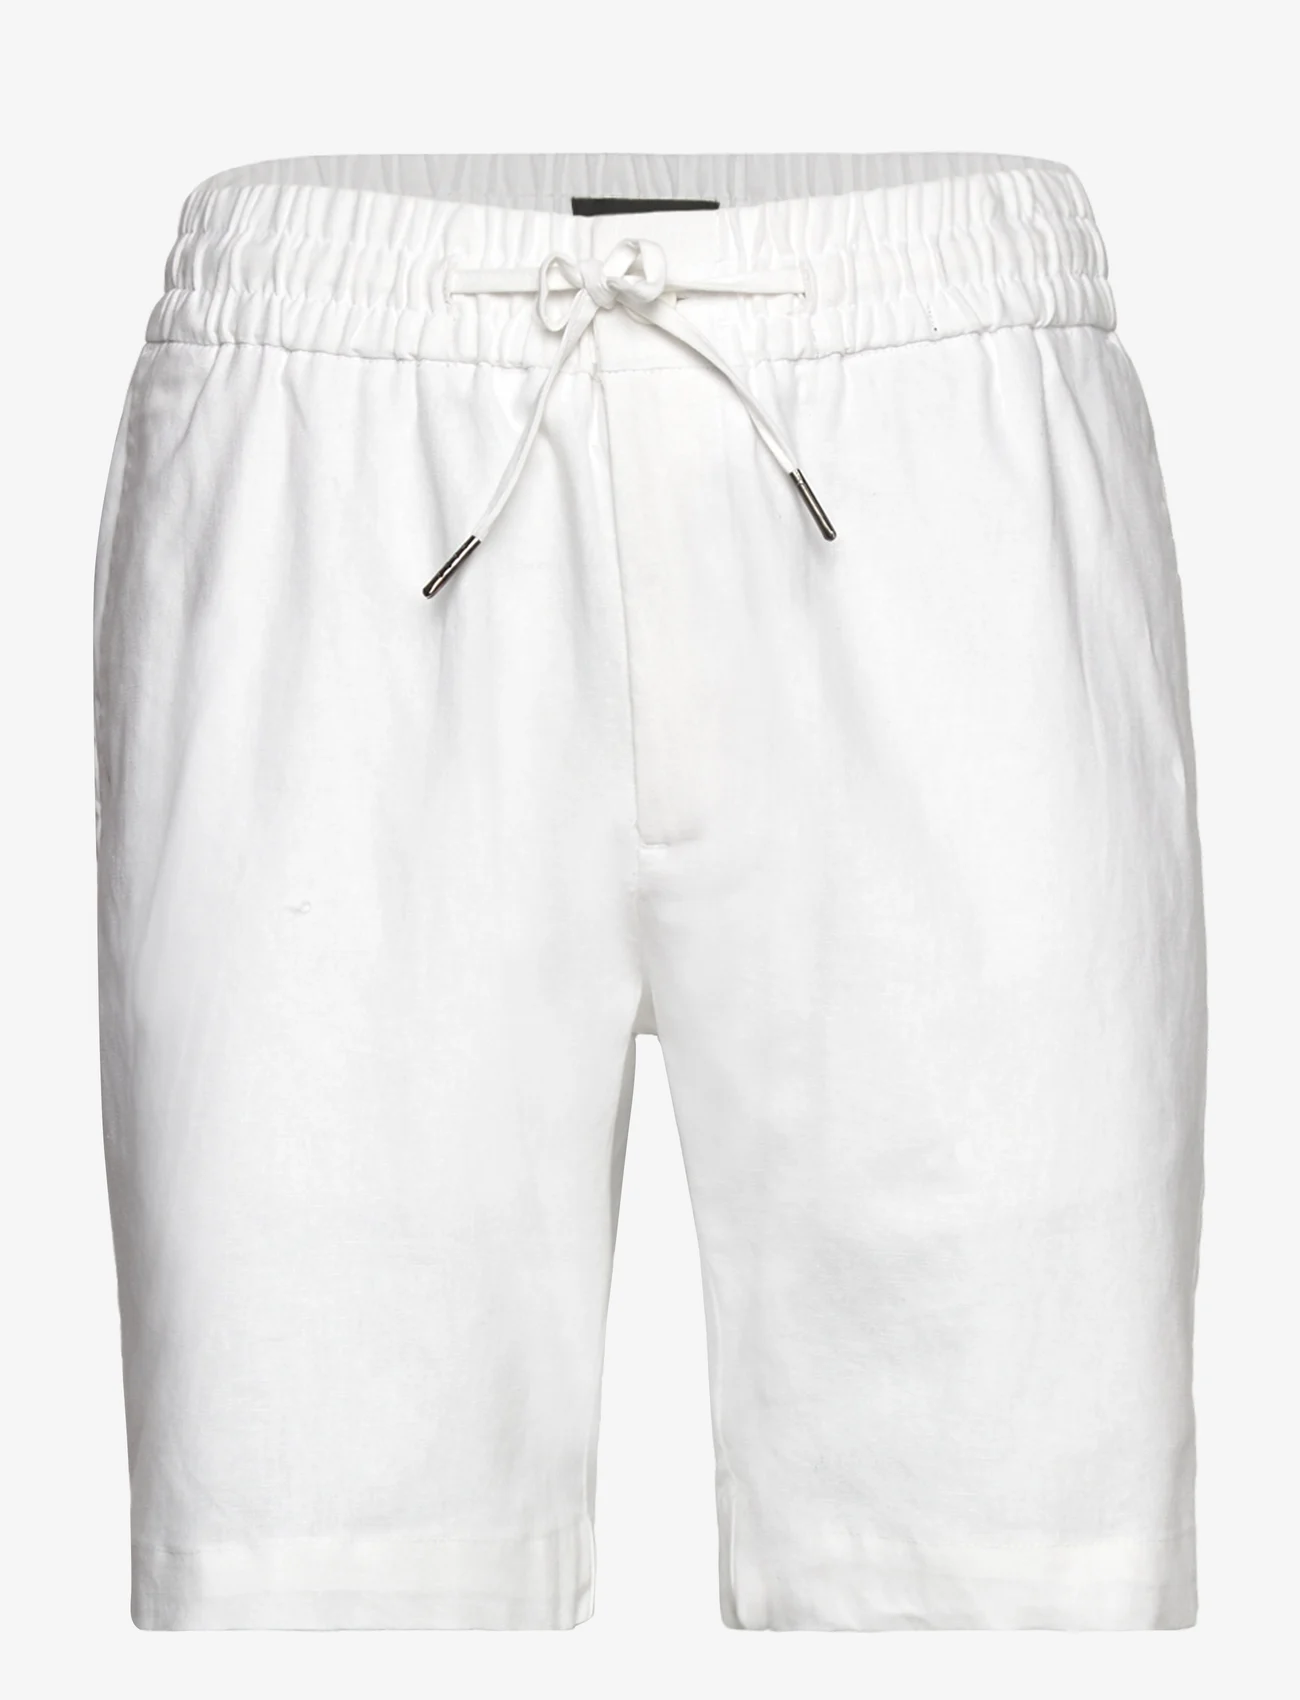 Clean Cut Copenhagen - Barcelona Cotton / Linen Shorts - leinen-shorts - white - 0